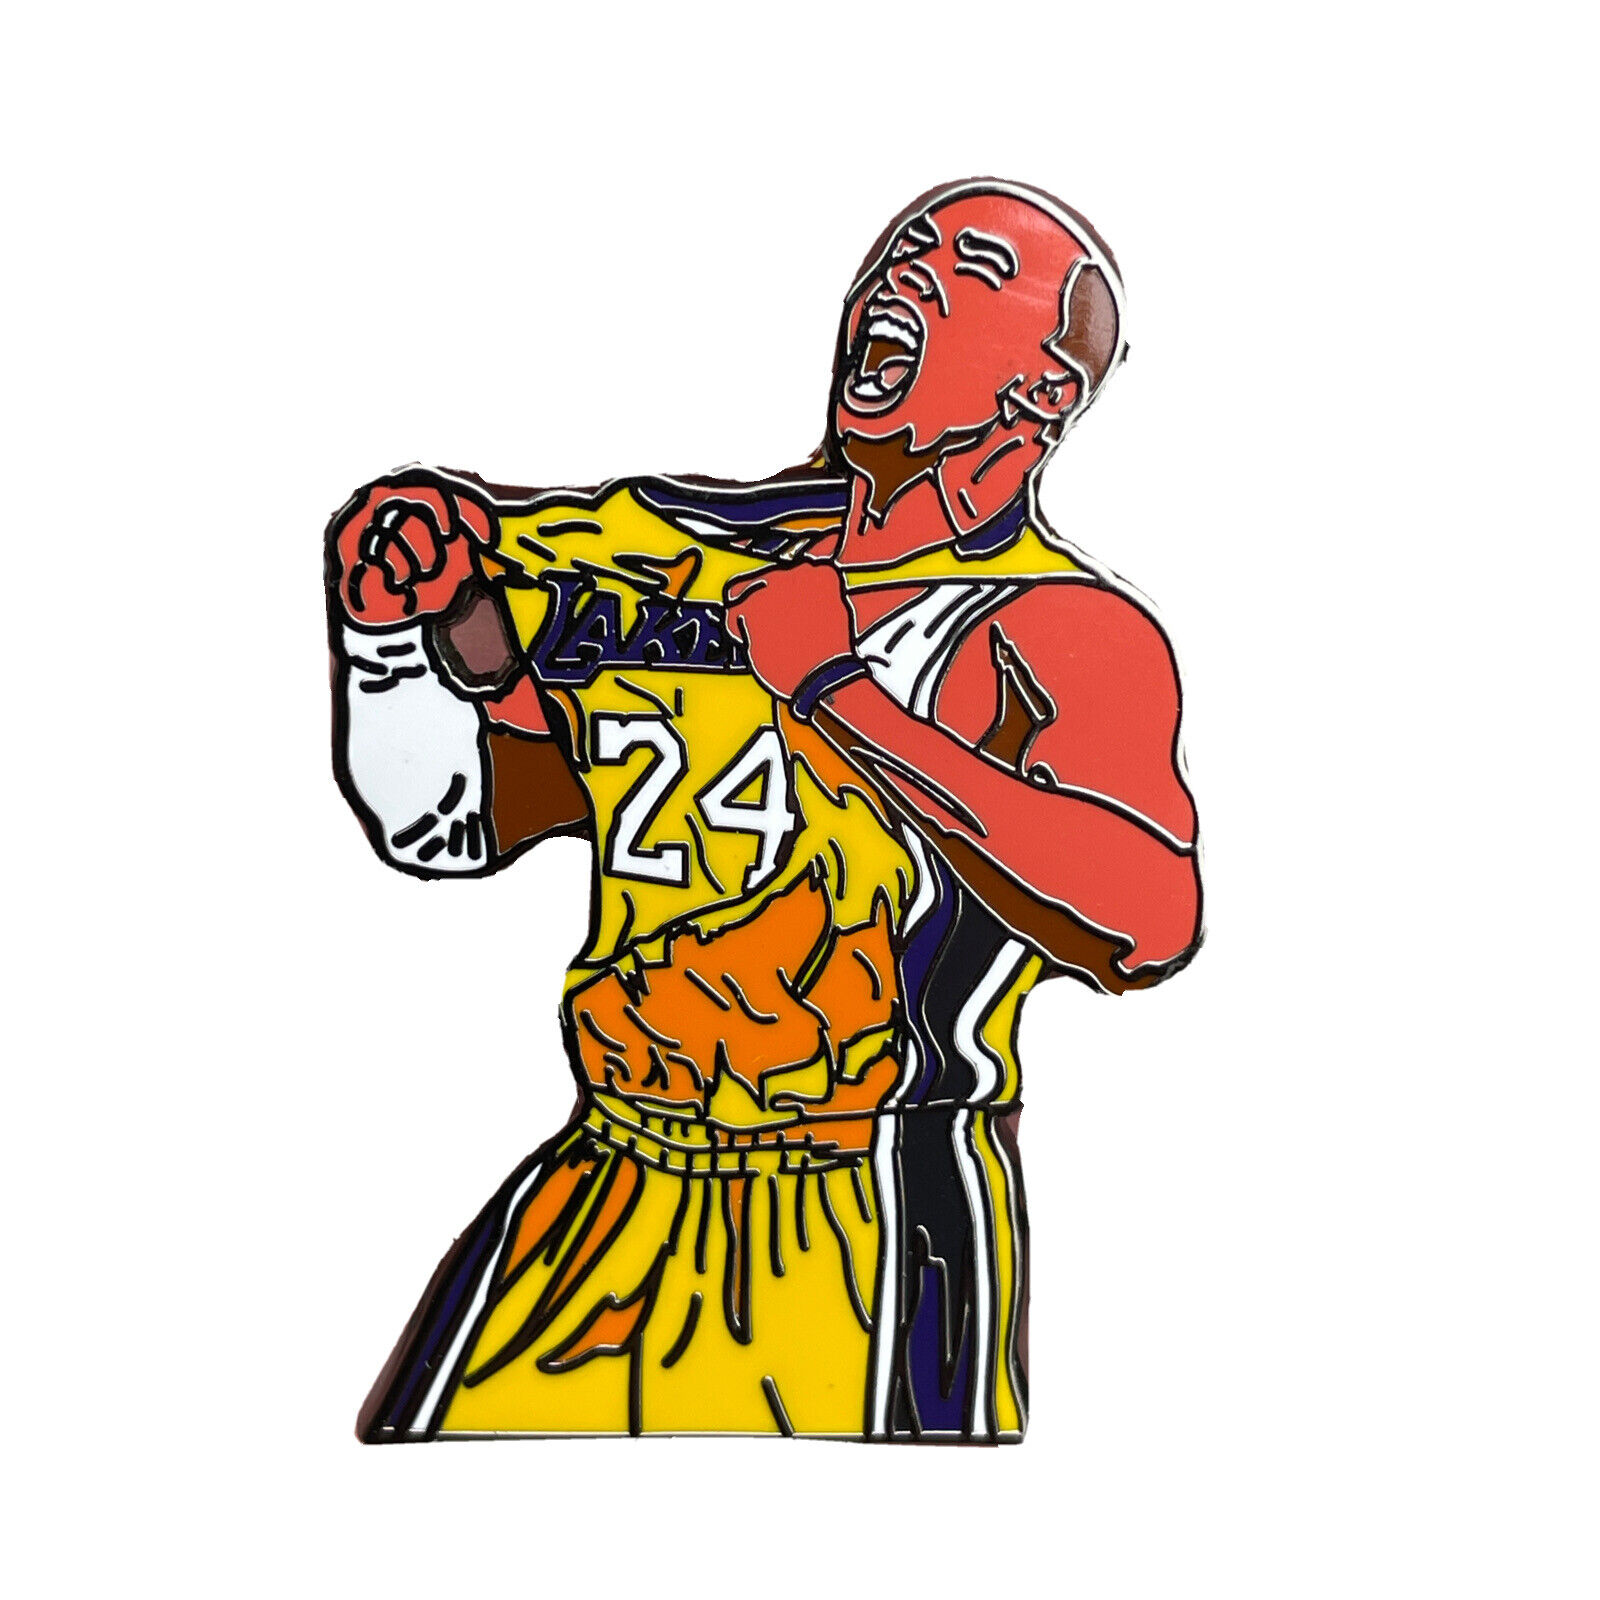 Kobe Lakers #24 Champion Memorial Pin - Black Mamba, Athlete Sports Pin